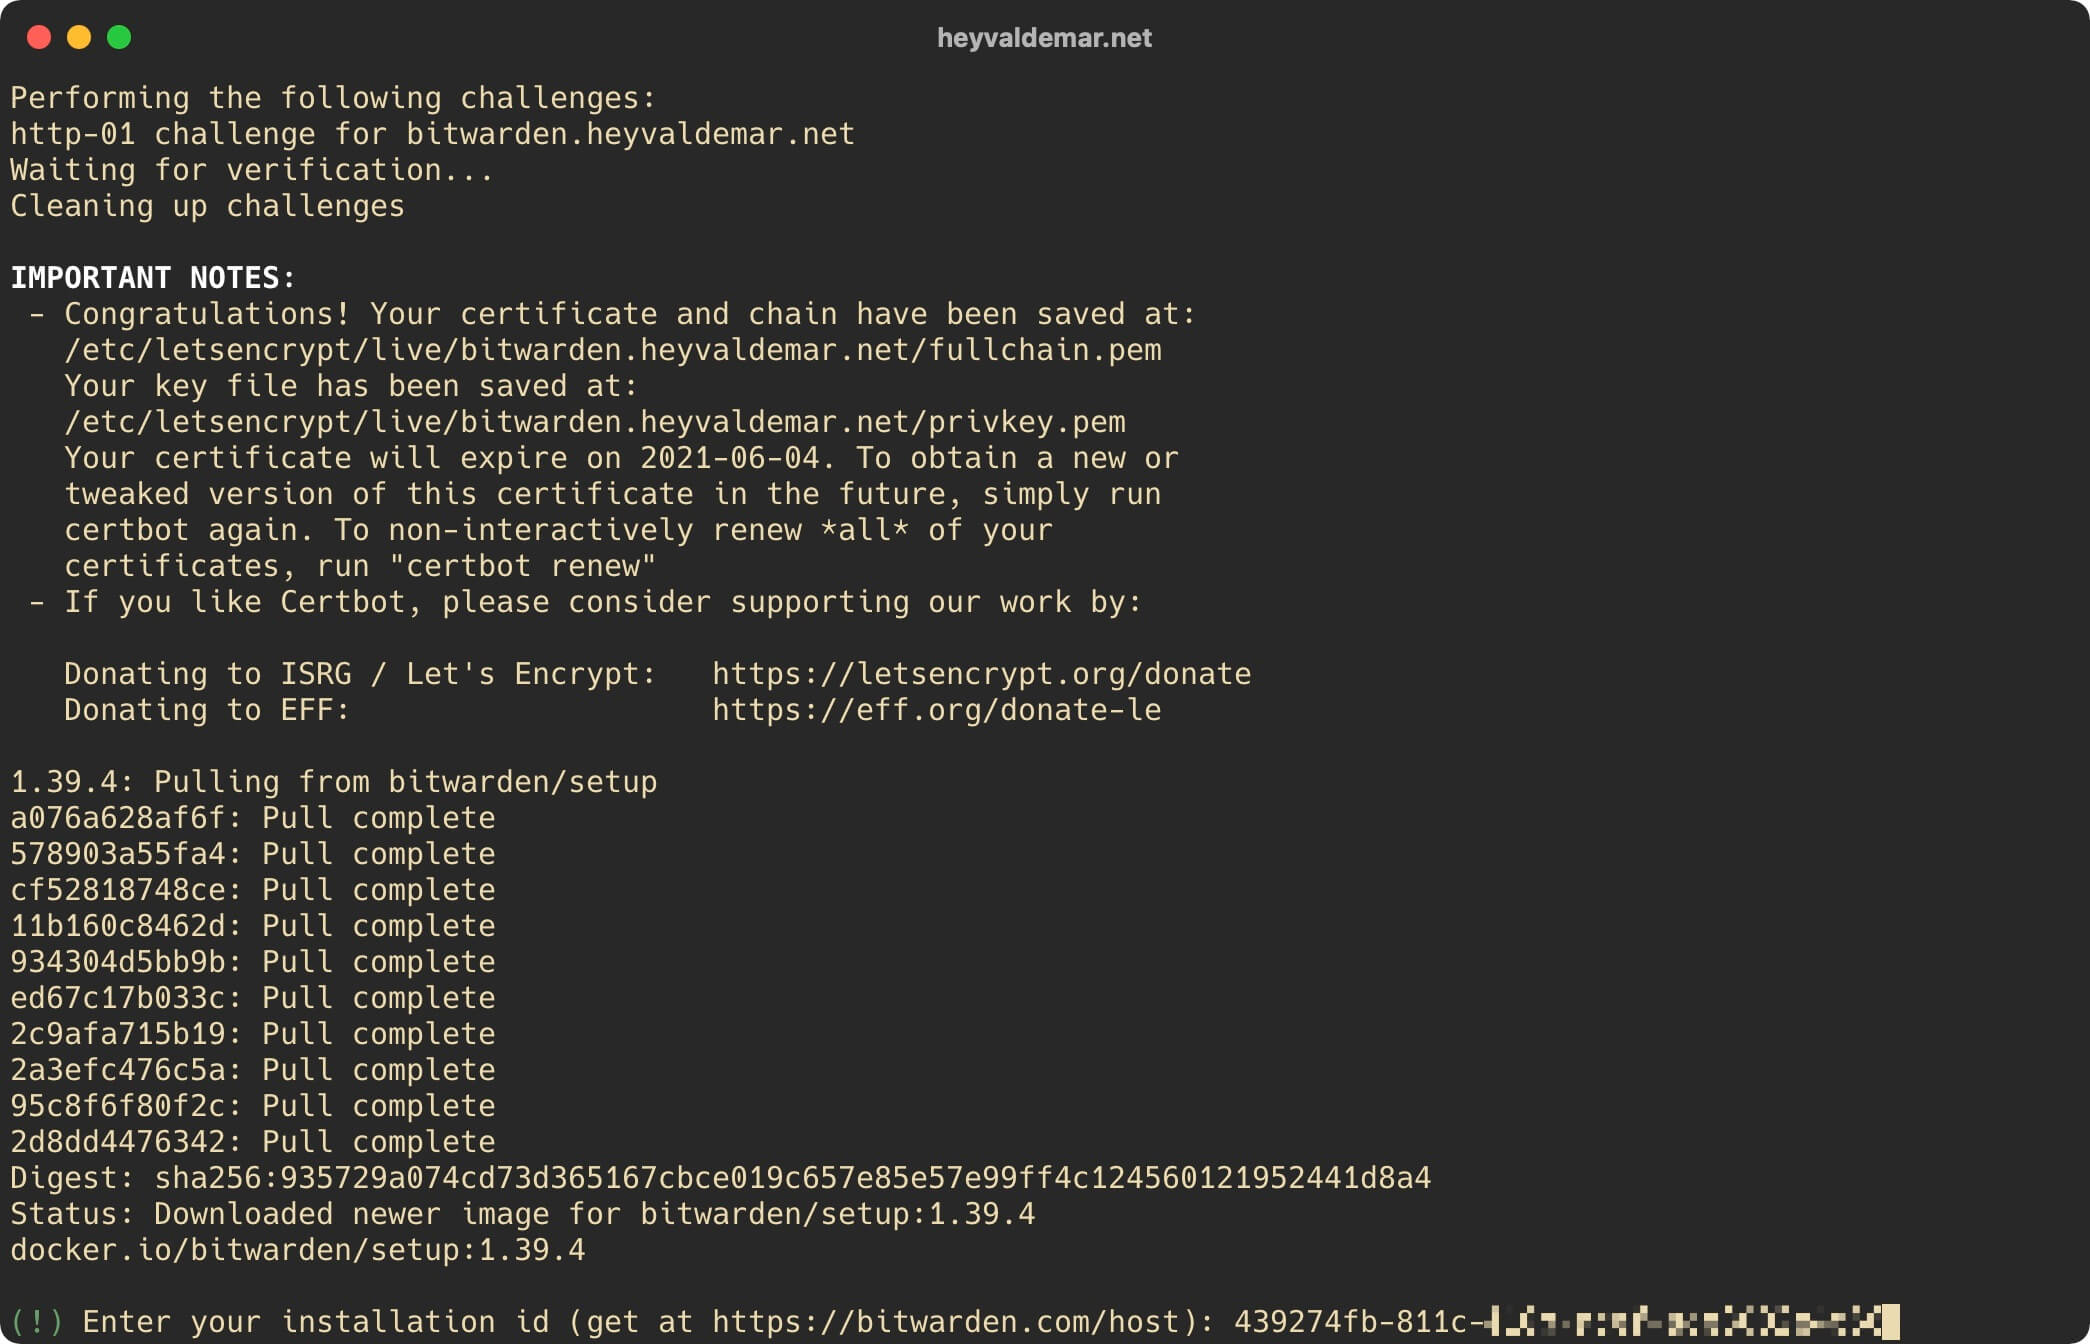 Install Bitwarden on Ubuntu Server 20.04 LTS